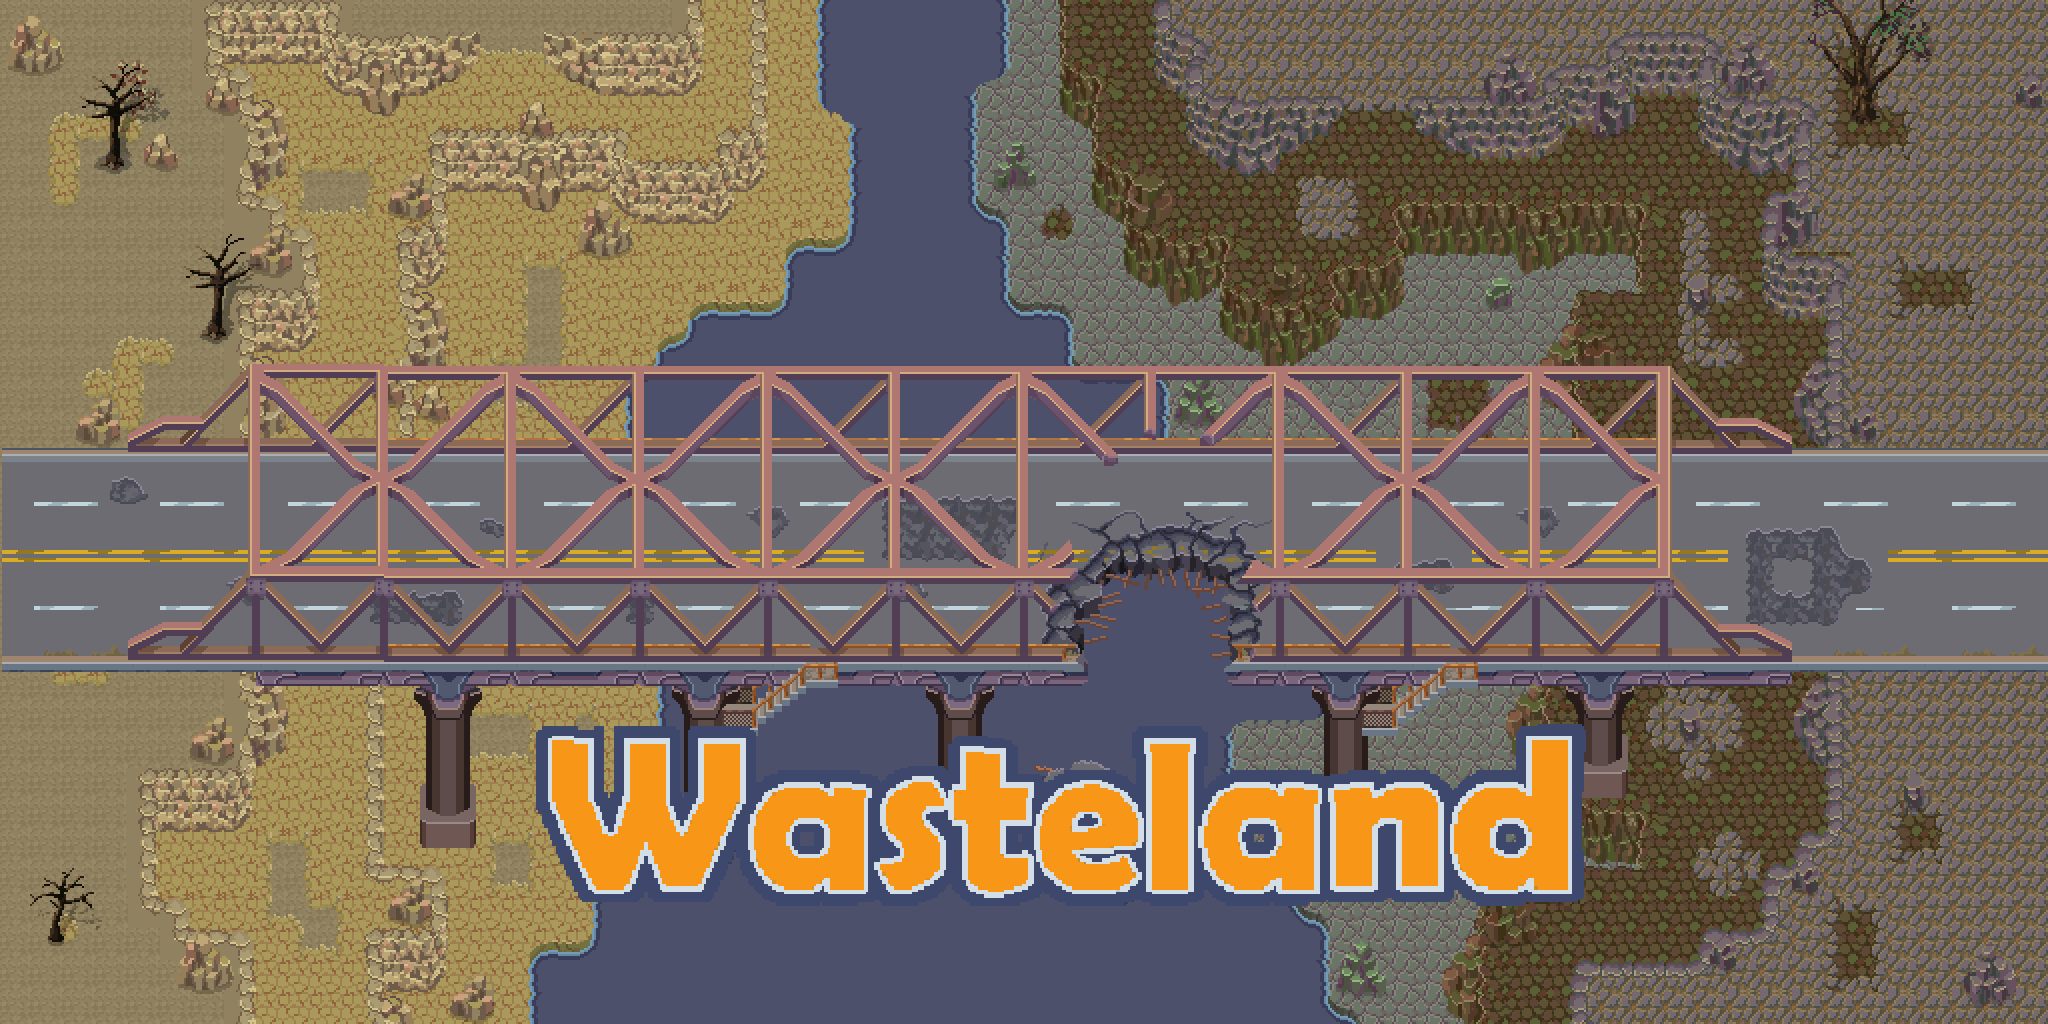 Wasteland: terrain and highway bridge